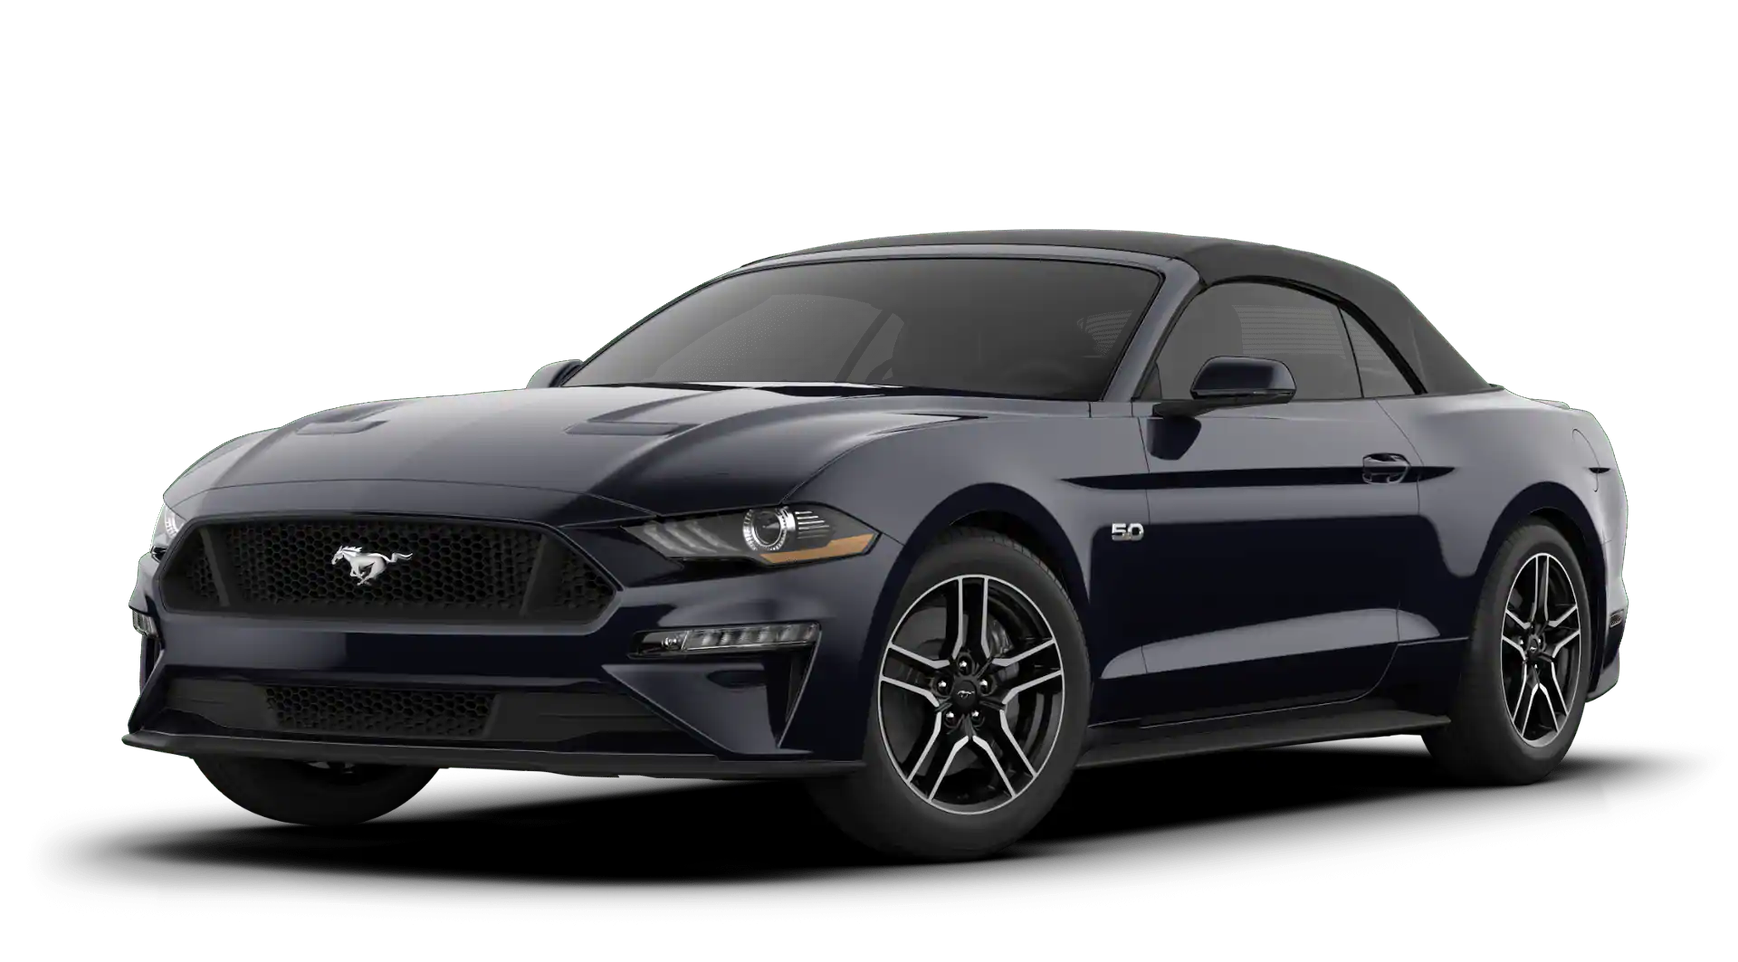 2020 Mustang Gt Convertible Performance
